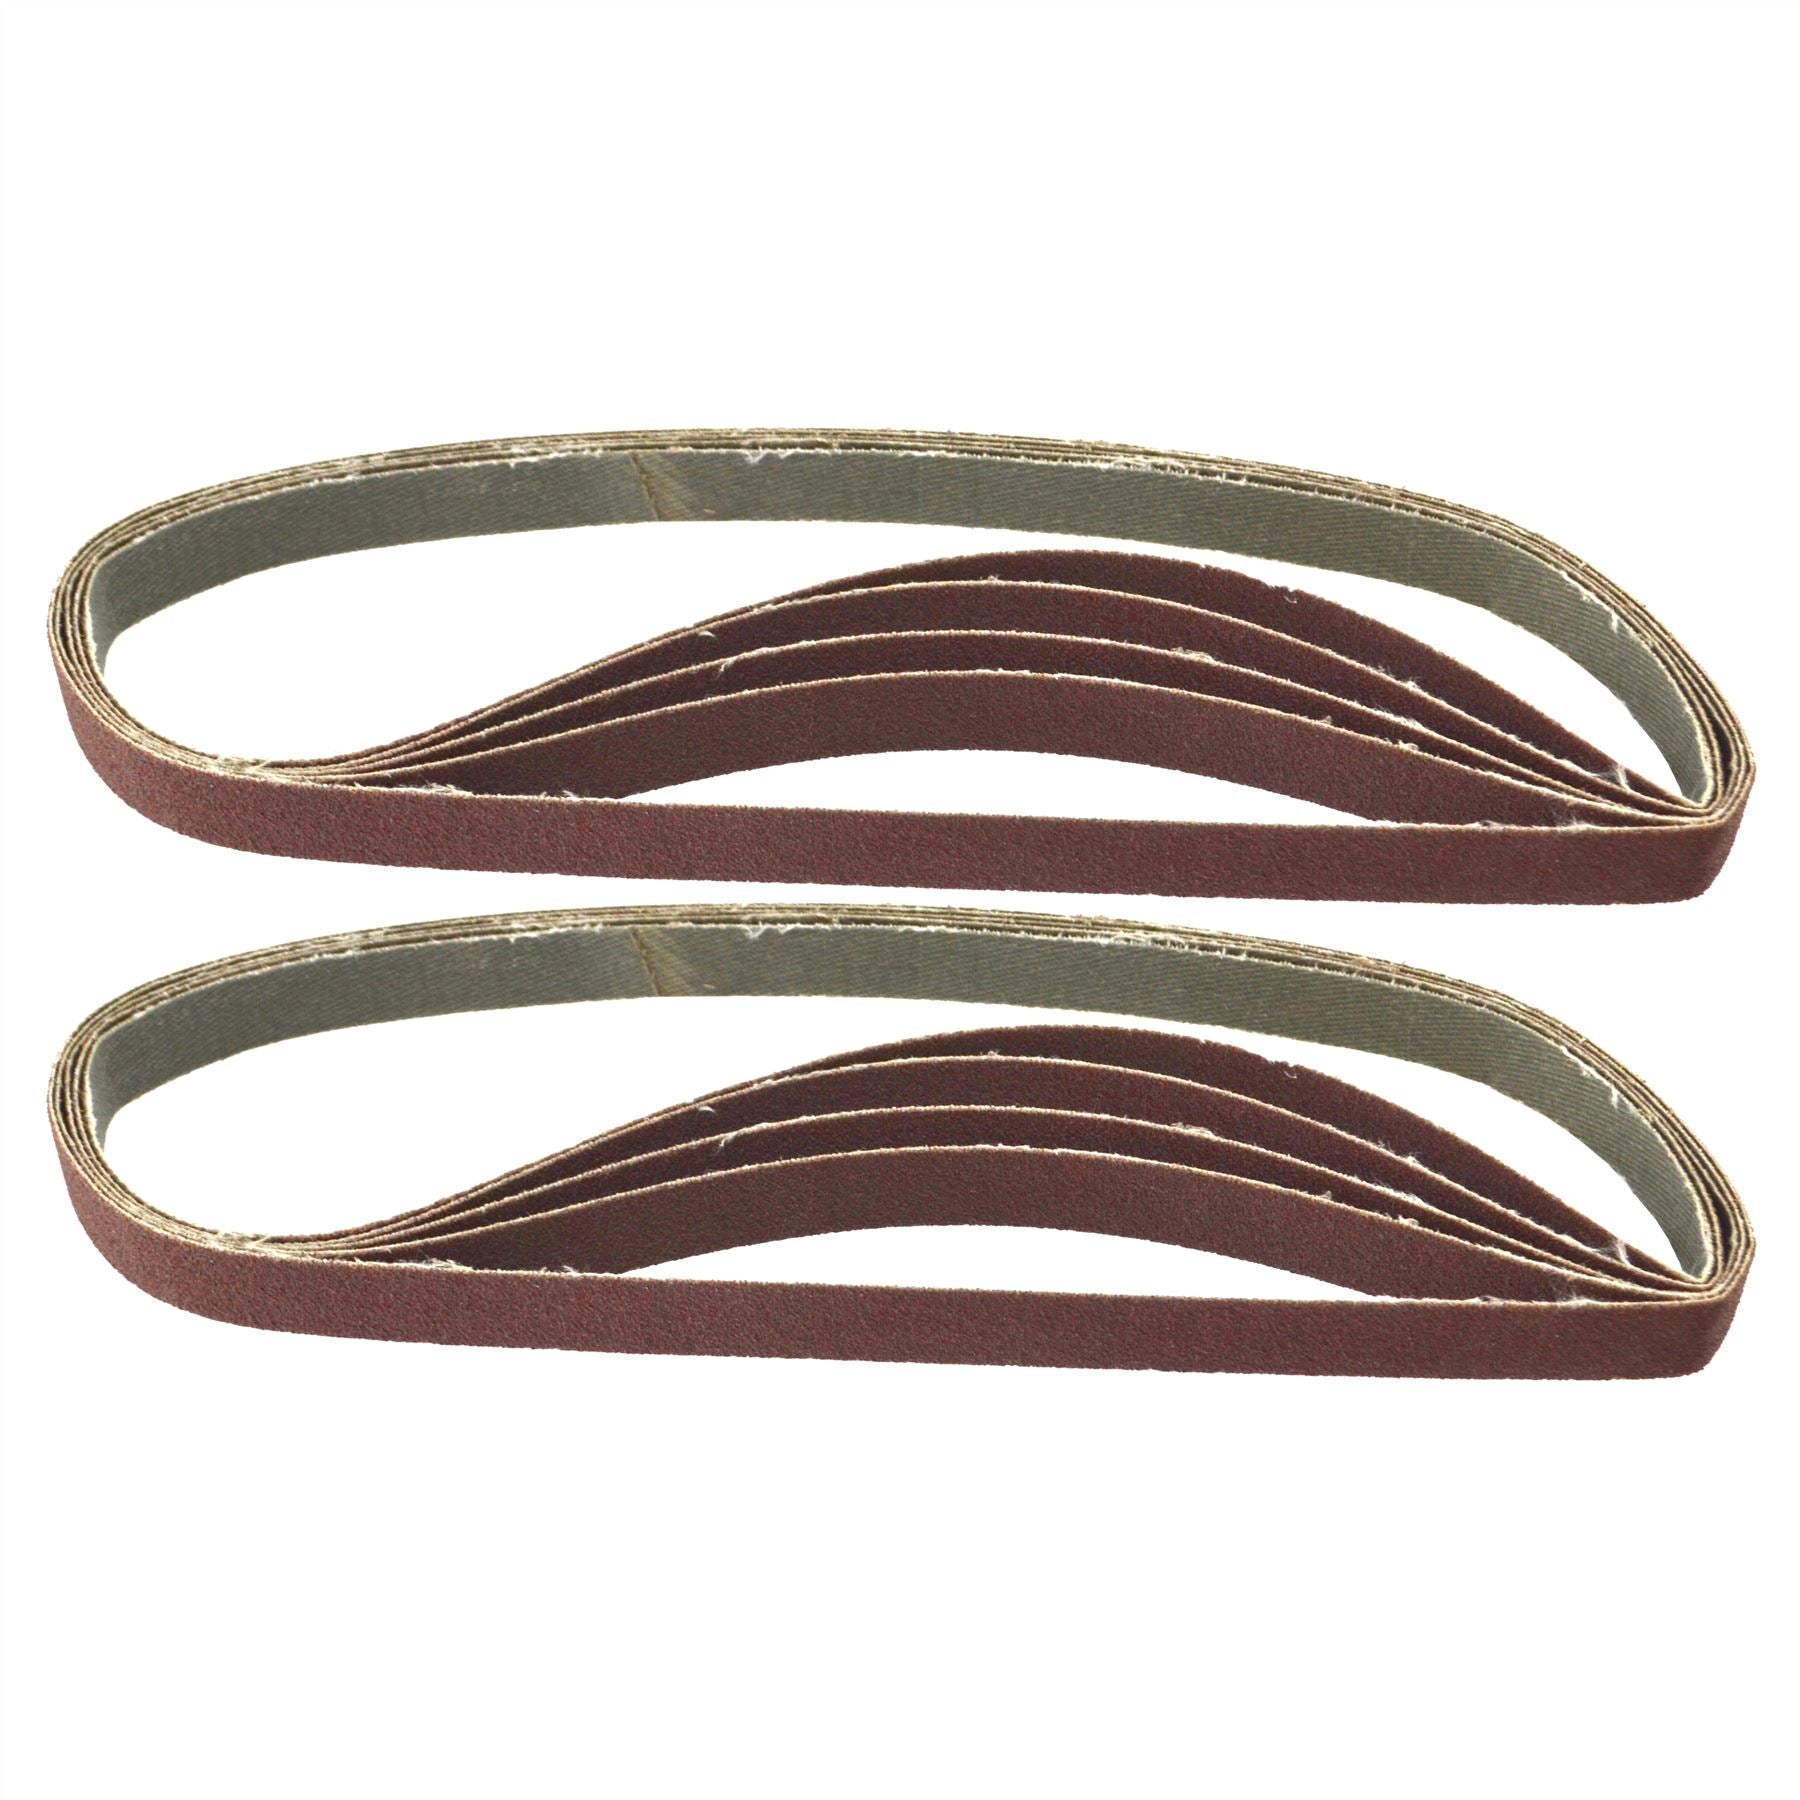 457 x 13mm Belt Power Finger File Sander Abrasive Sanding Belts